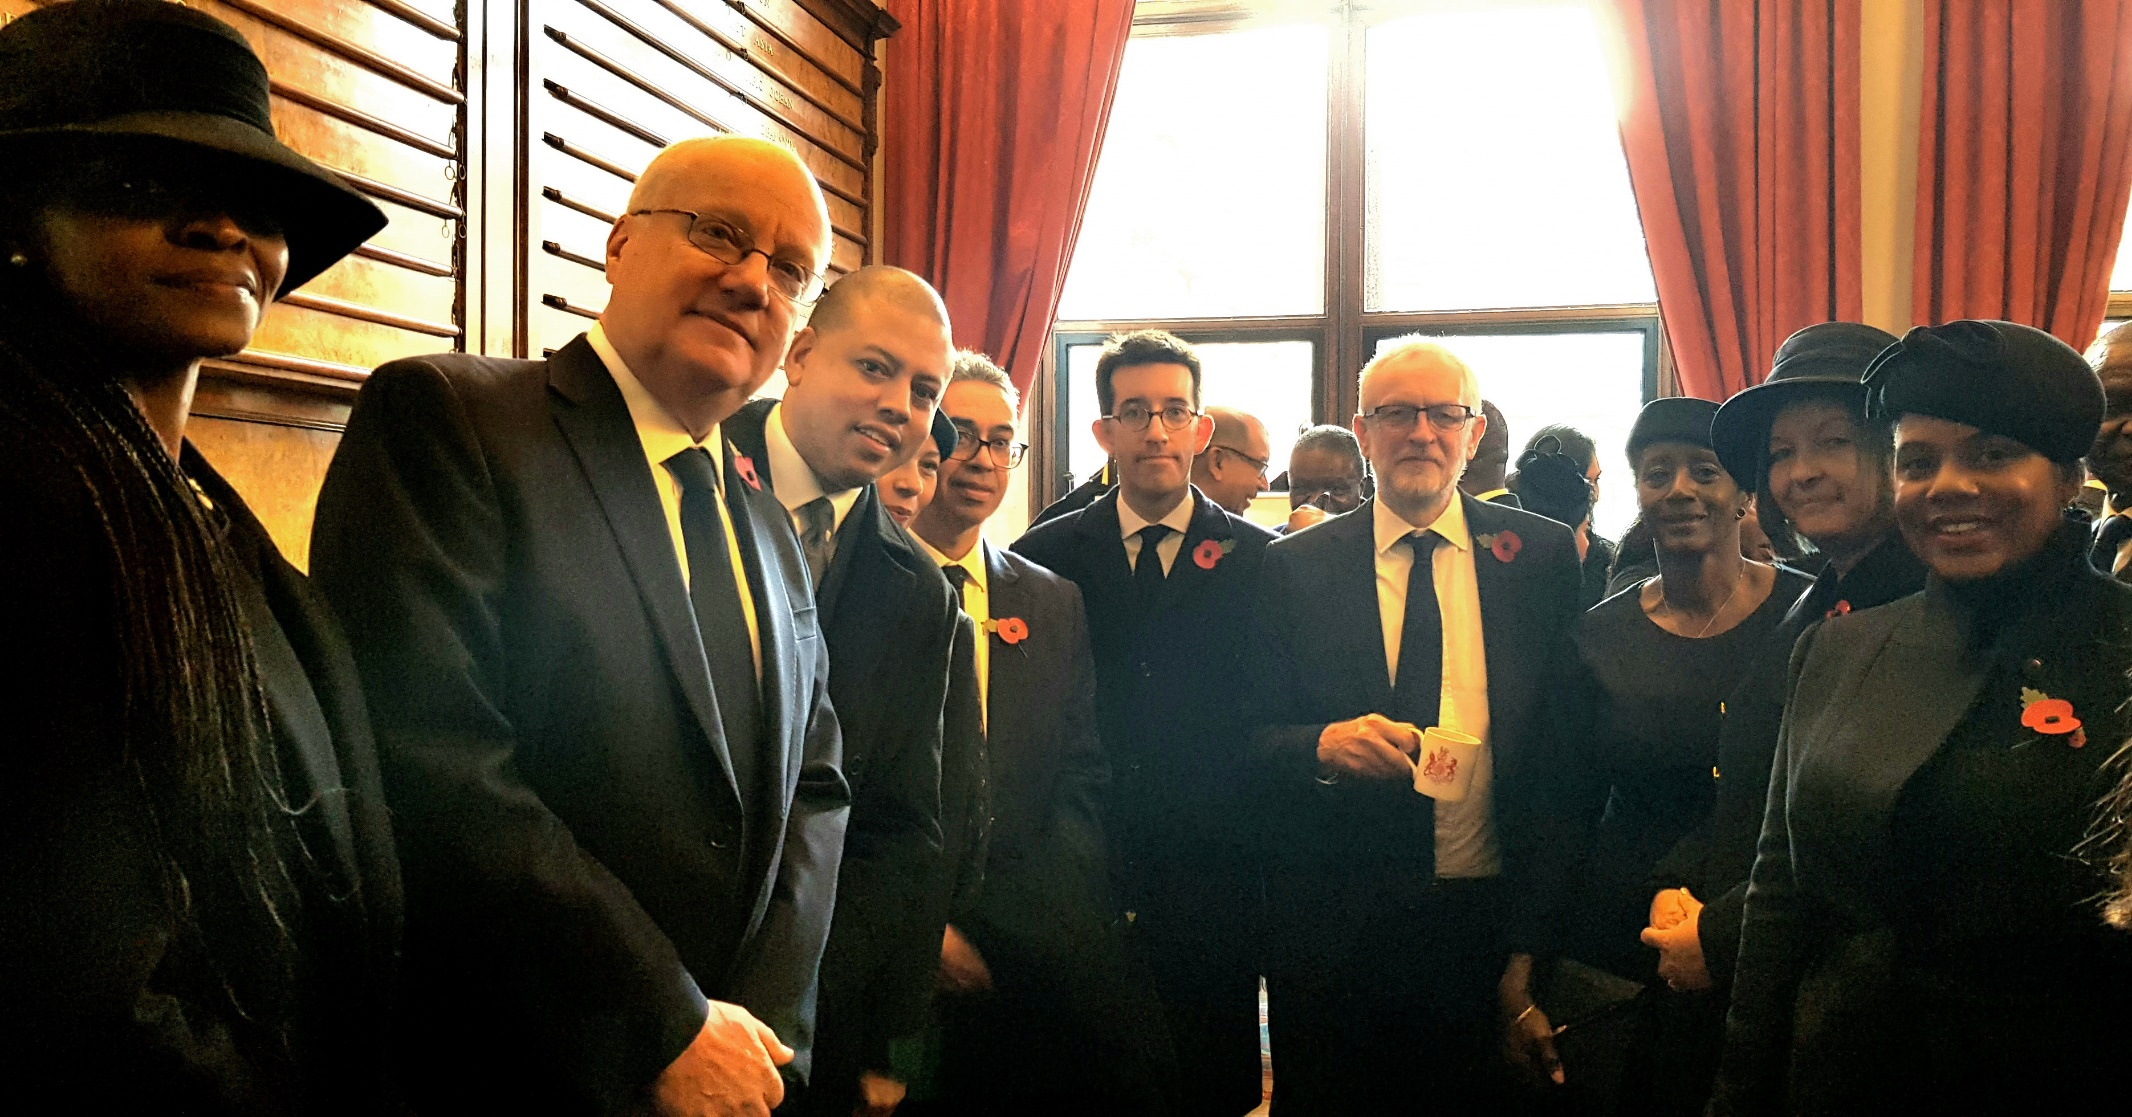 OT representatives with Jeremy Corbyn